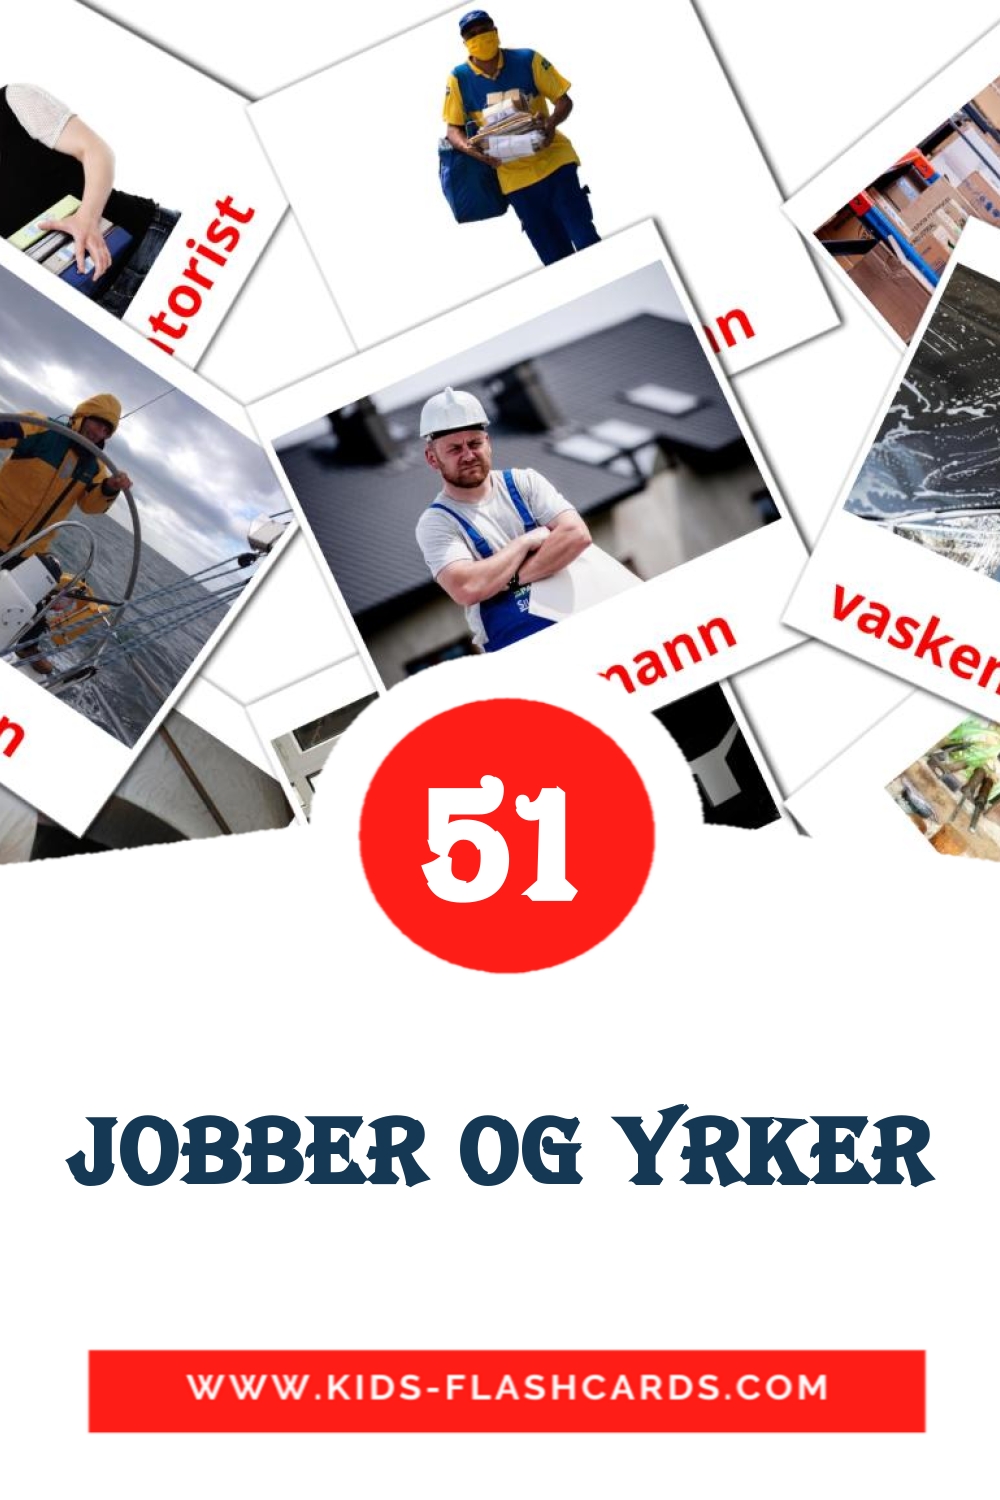 51 carte illustrate di Jobber og yrker per la scuola materna in norvegese